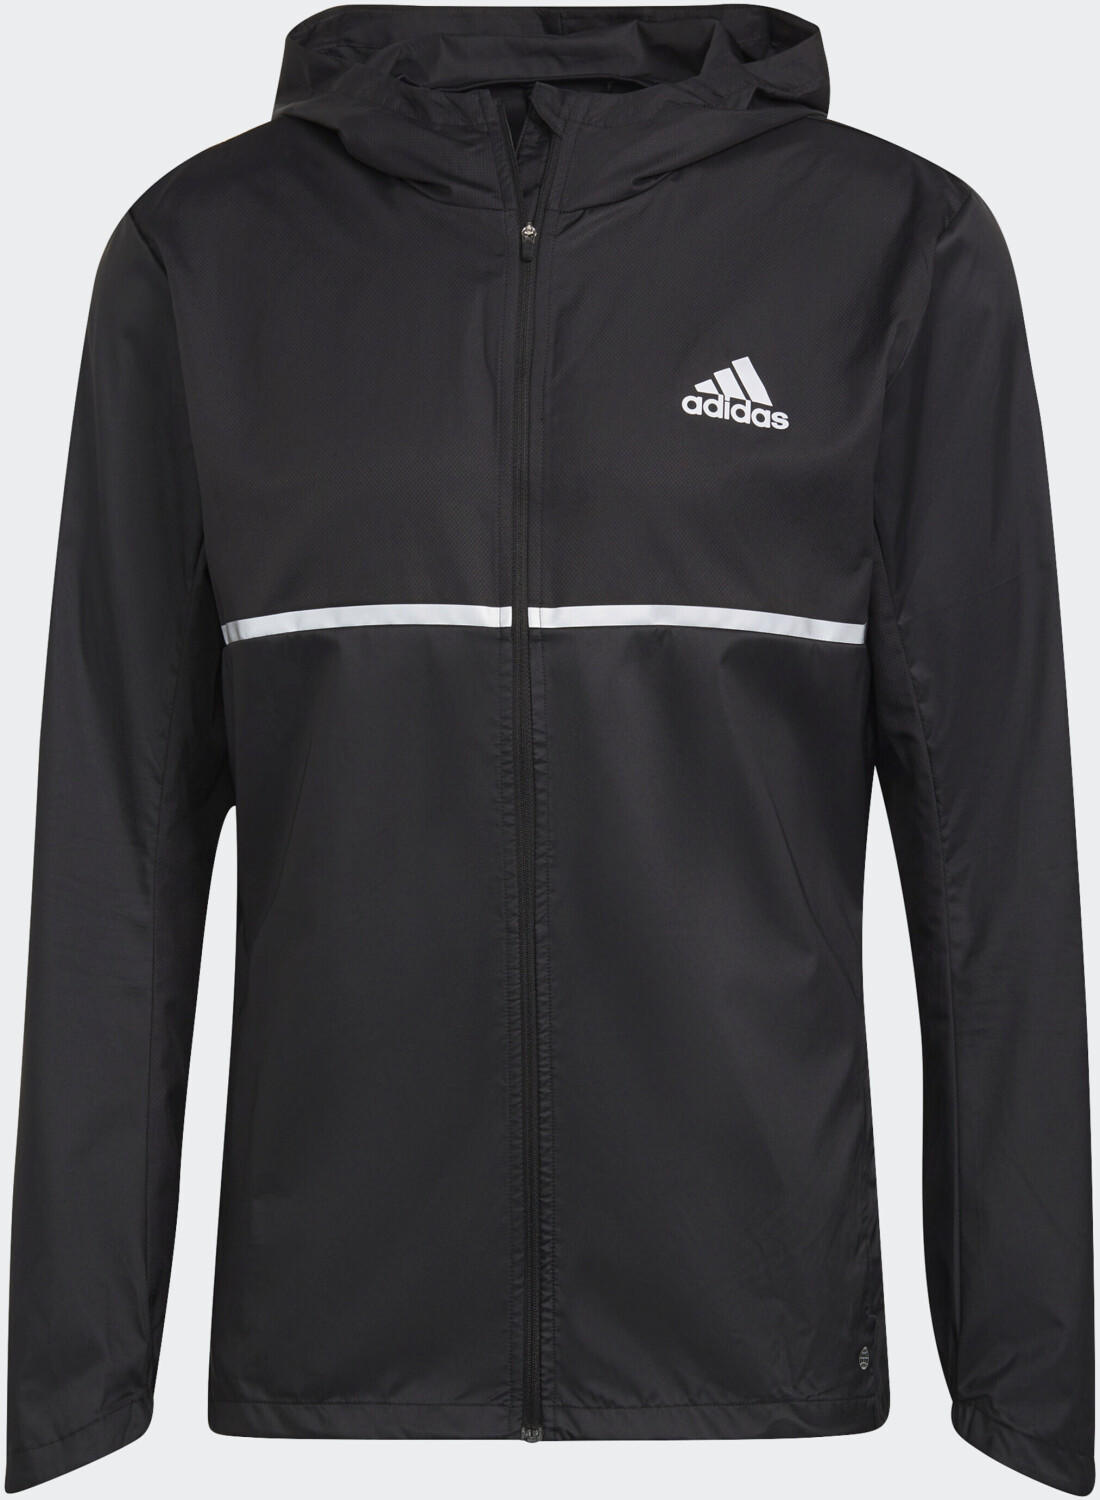 Adidas Own the Run Jacket black/reflective silver Test - ab 36,95 €